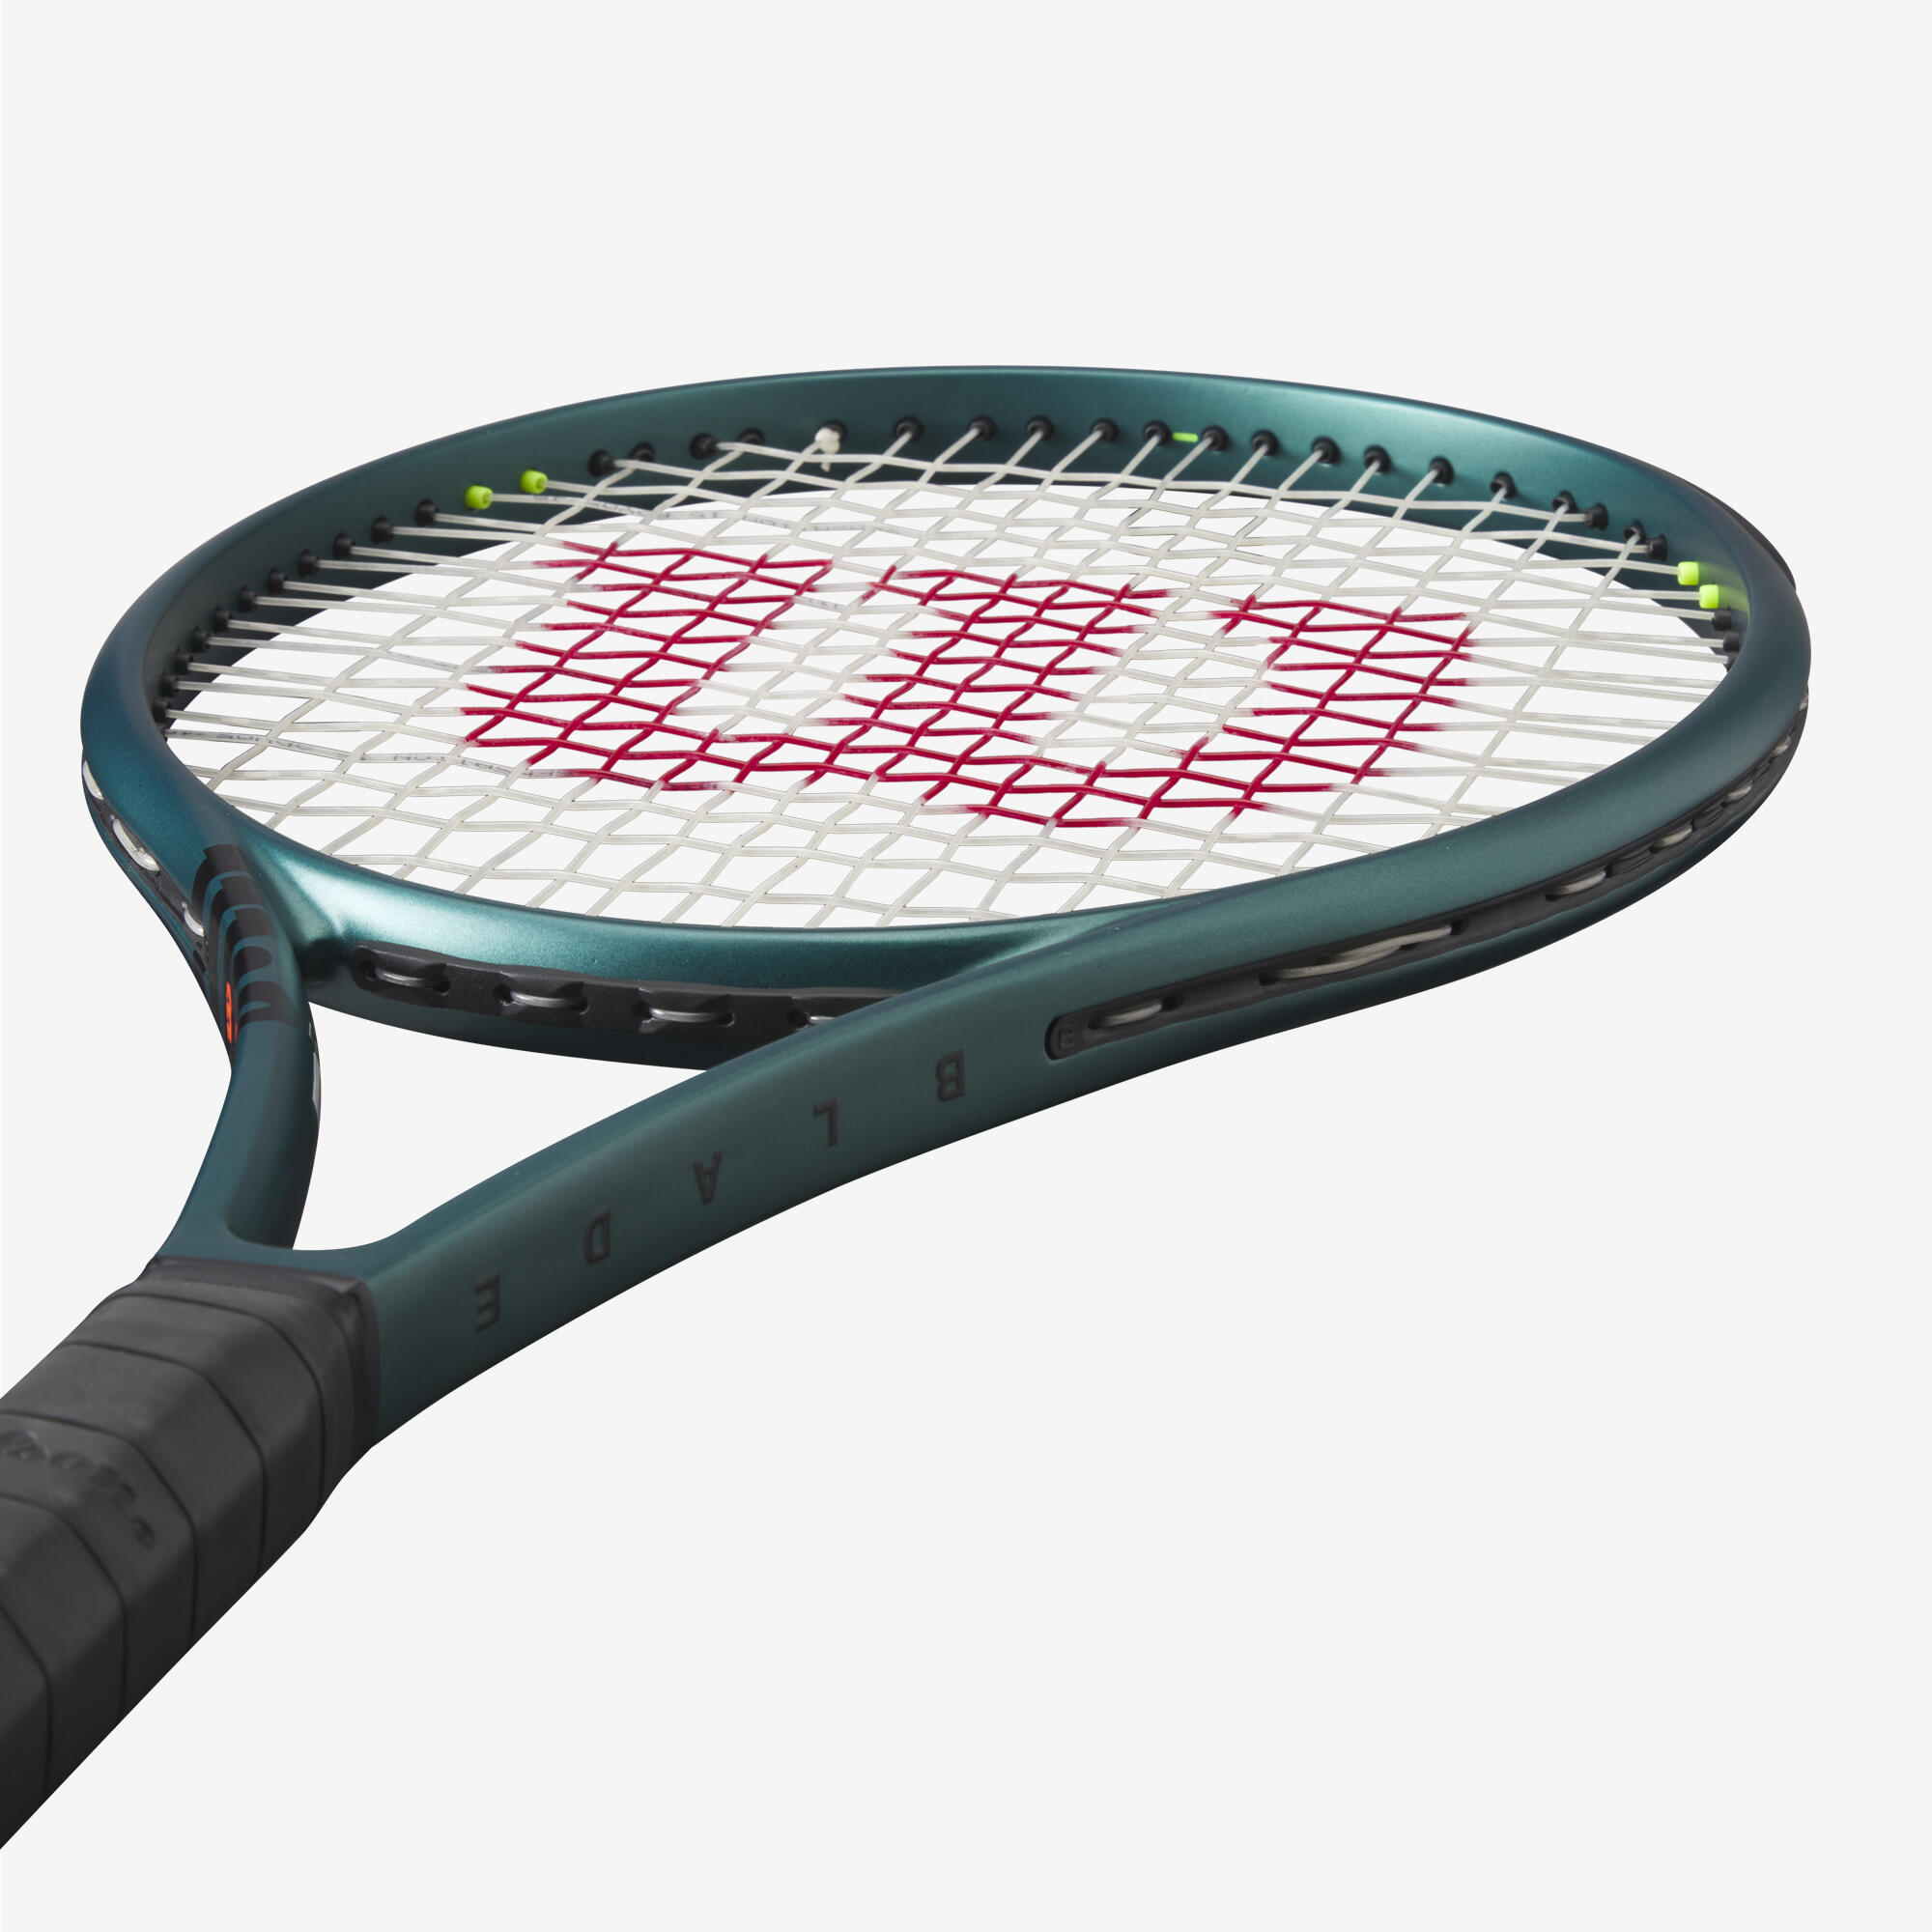 Adult Tennis Racket Blade 100 V9 300 g Unstrung - Dark Green 5/6